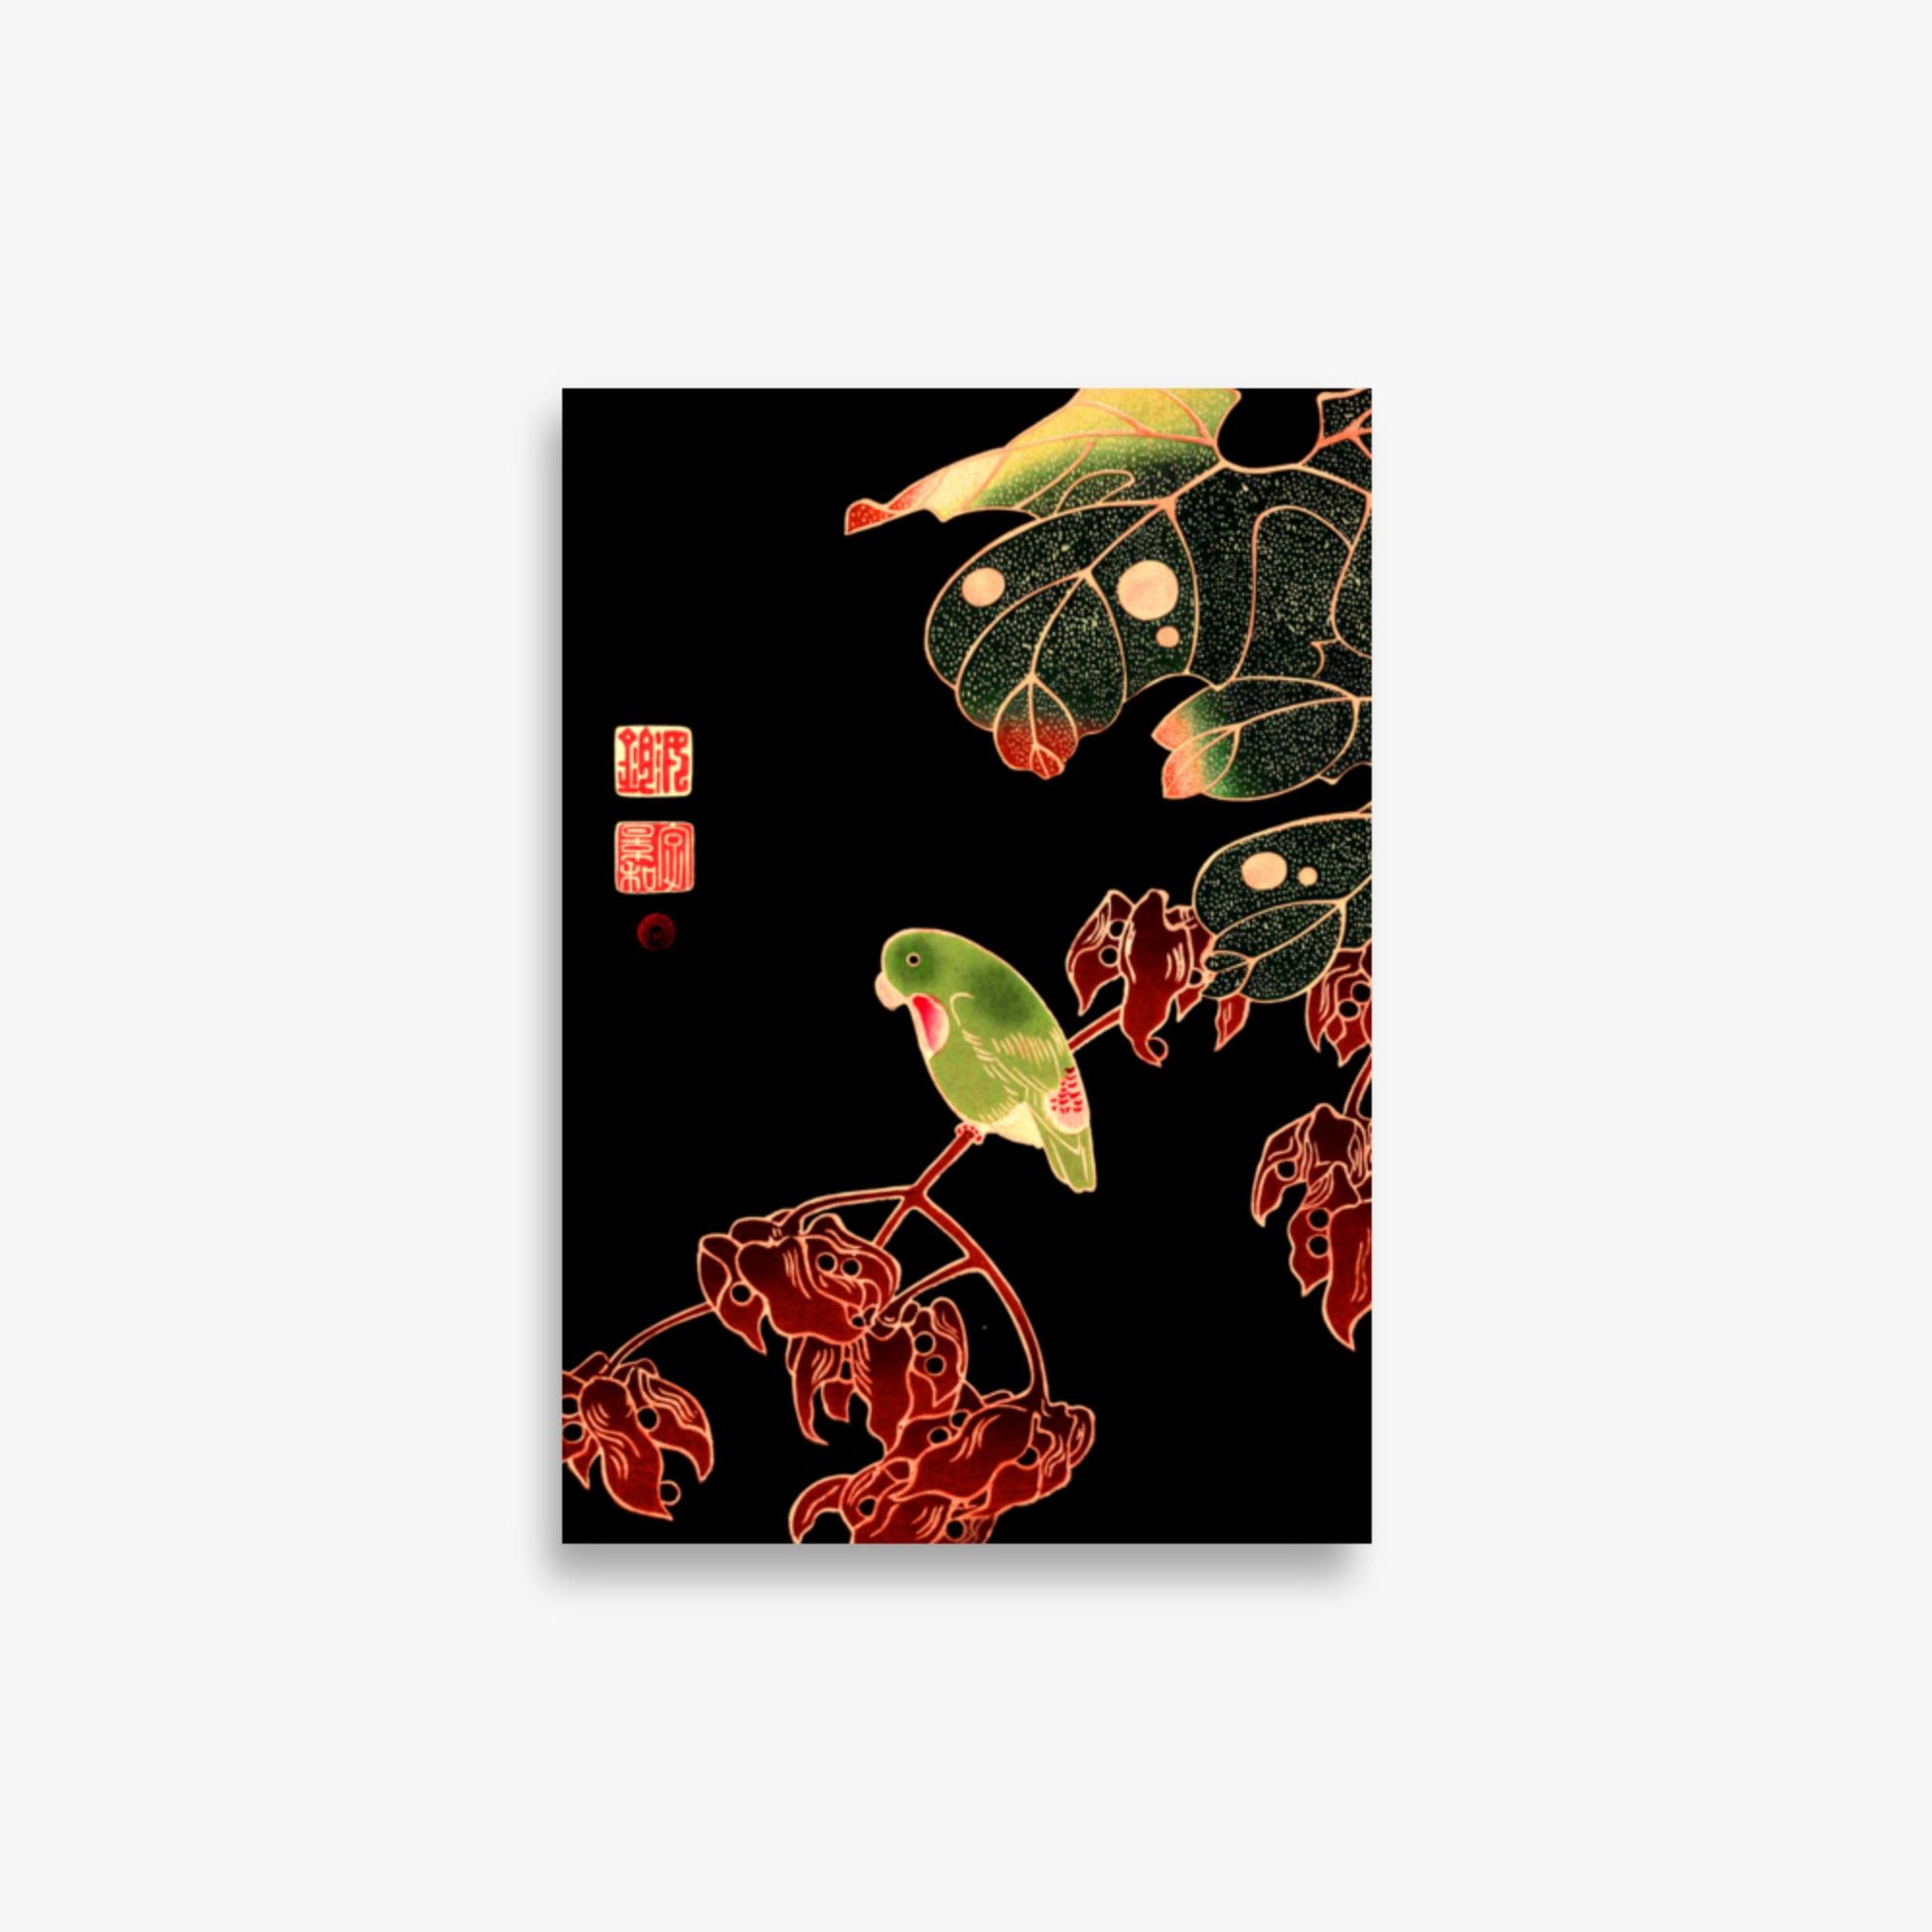 Ito Jakuchu - The Paroquet 21x30 cm Poster